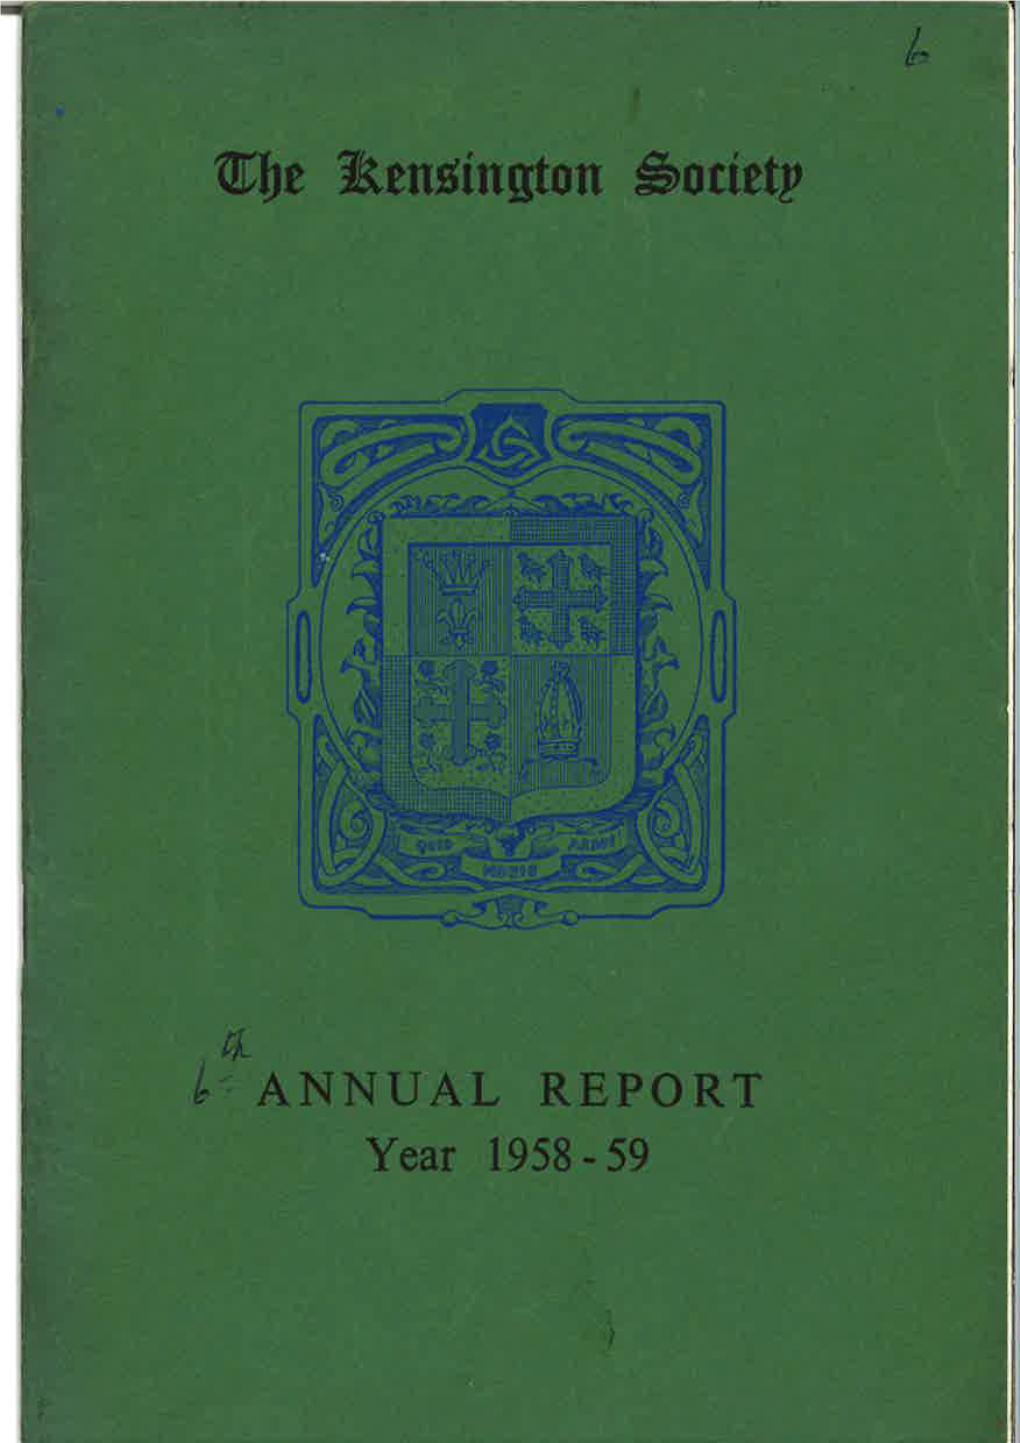 ANNUAL REPORT Year 1958 - 59 THE, KE,NSINGTON SOCIETY